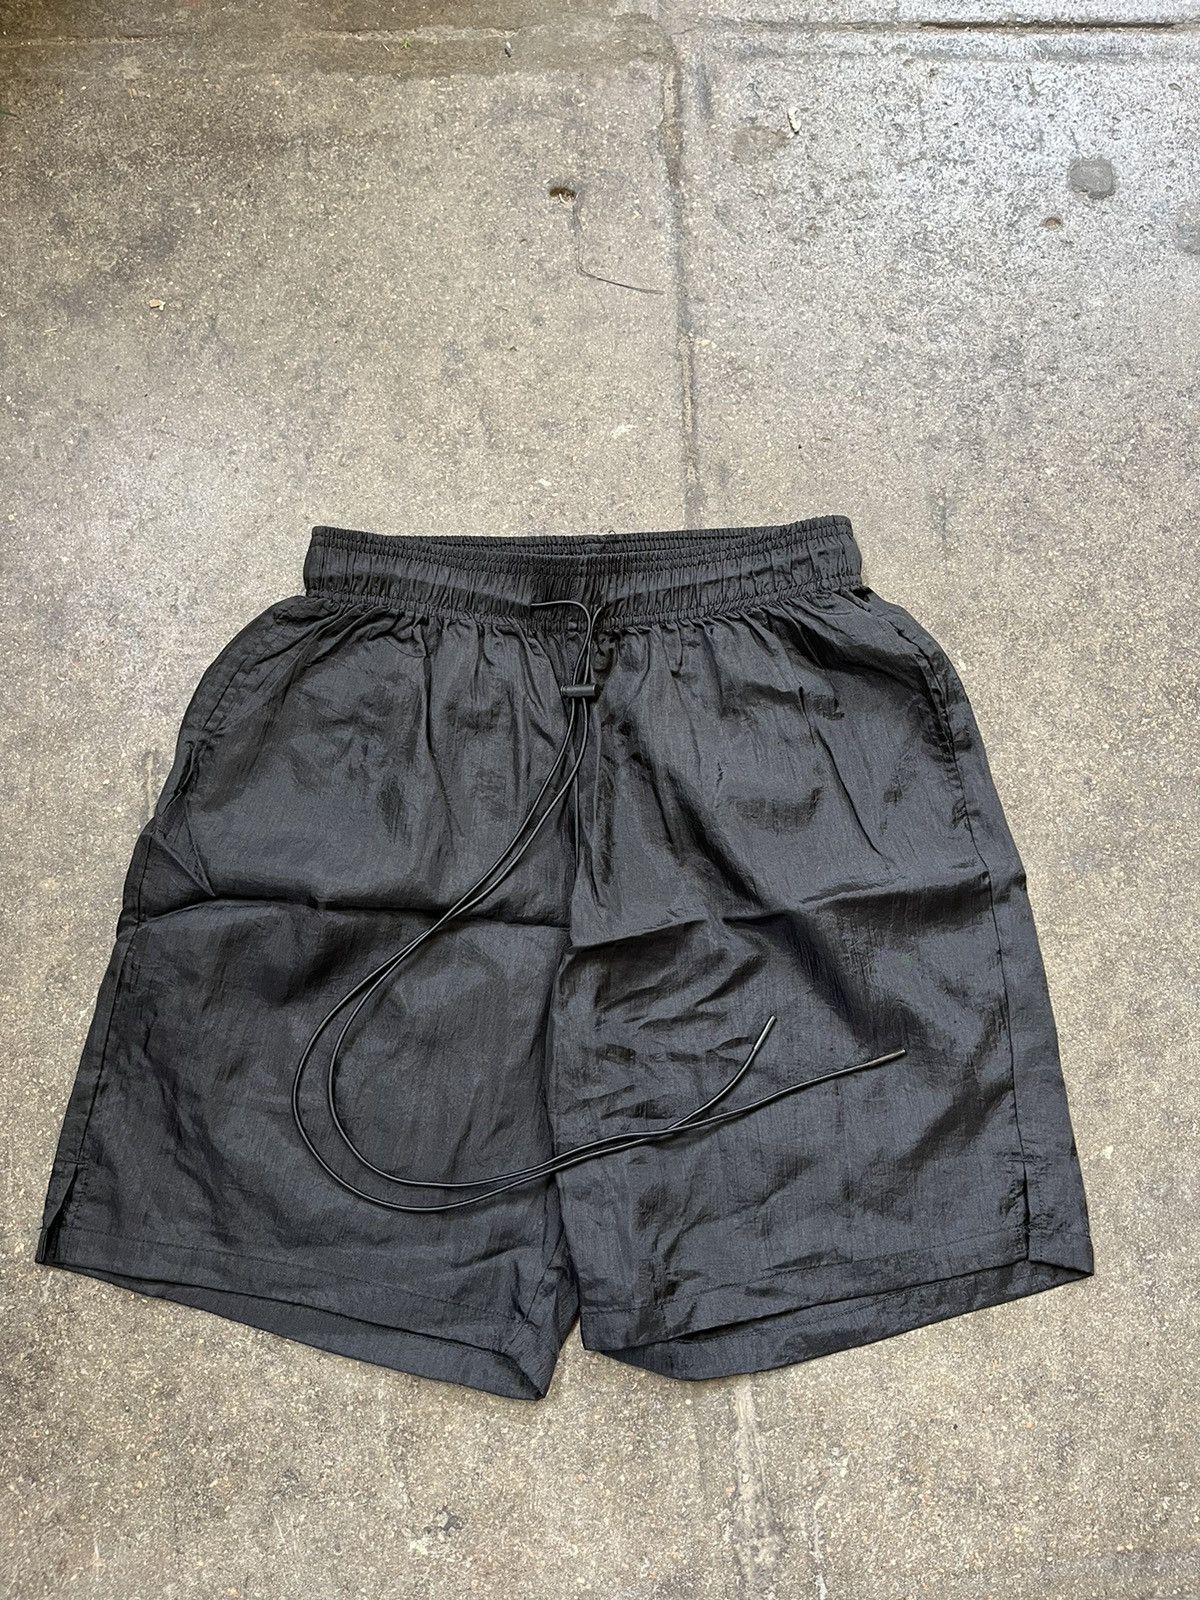 Vintage Crinkle Nylon Shorts Black | Grailed